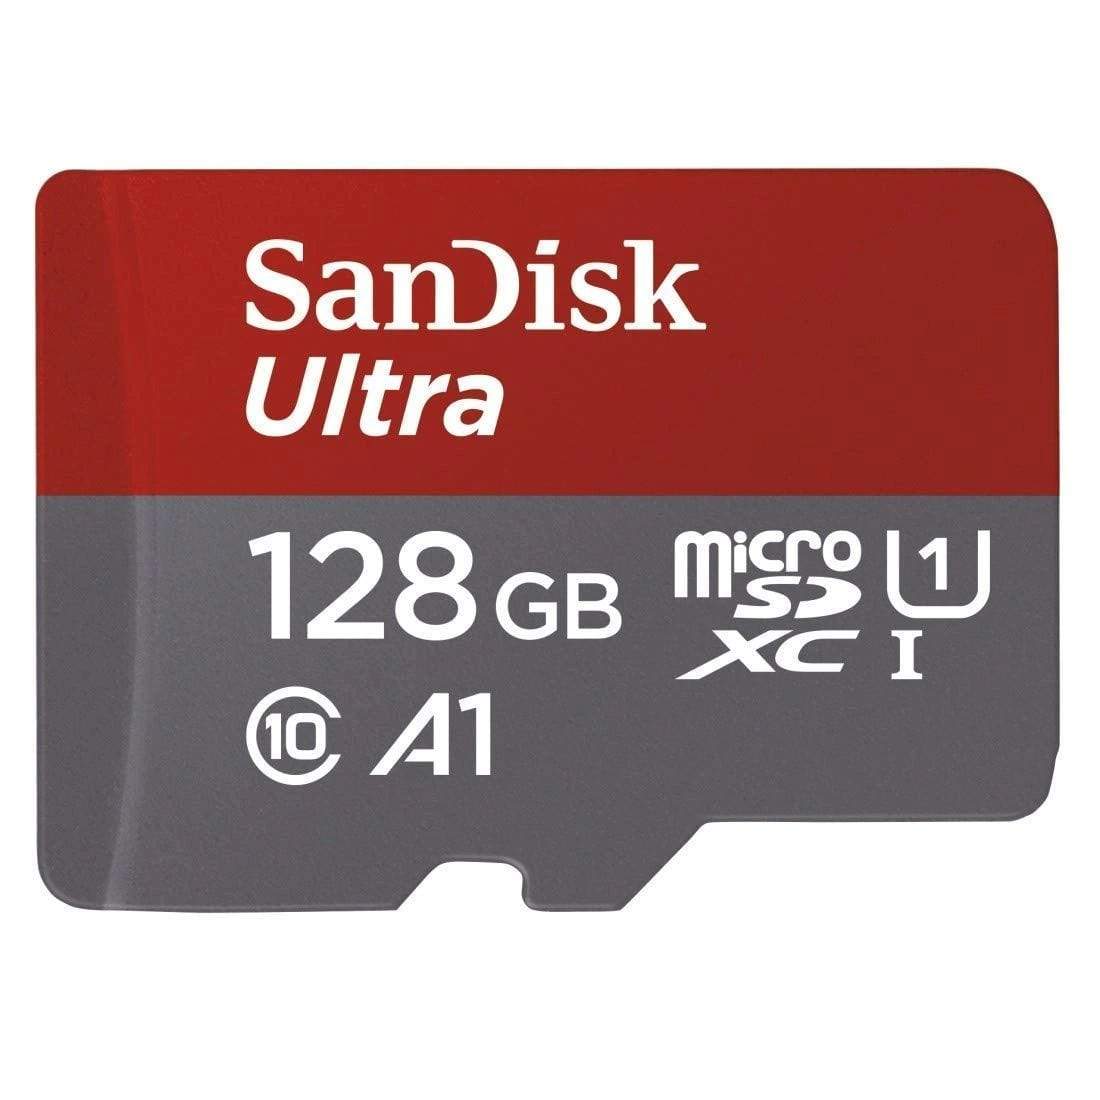 SanDisk Ultra 128GB MicroSD SDHC Memory Card Class 10 Hi-Speed-Memory Cards-dealsplant